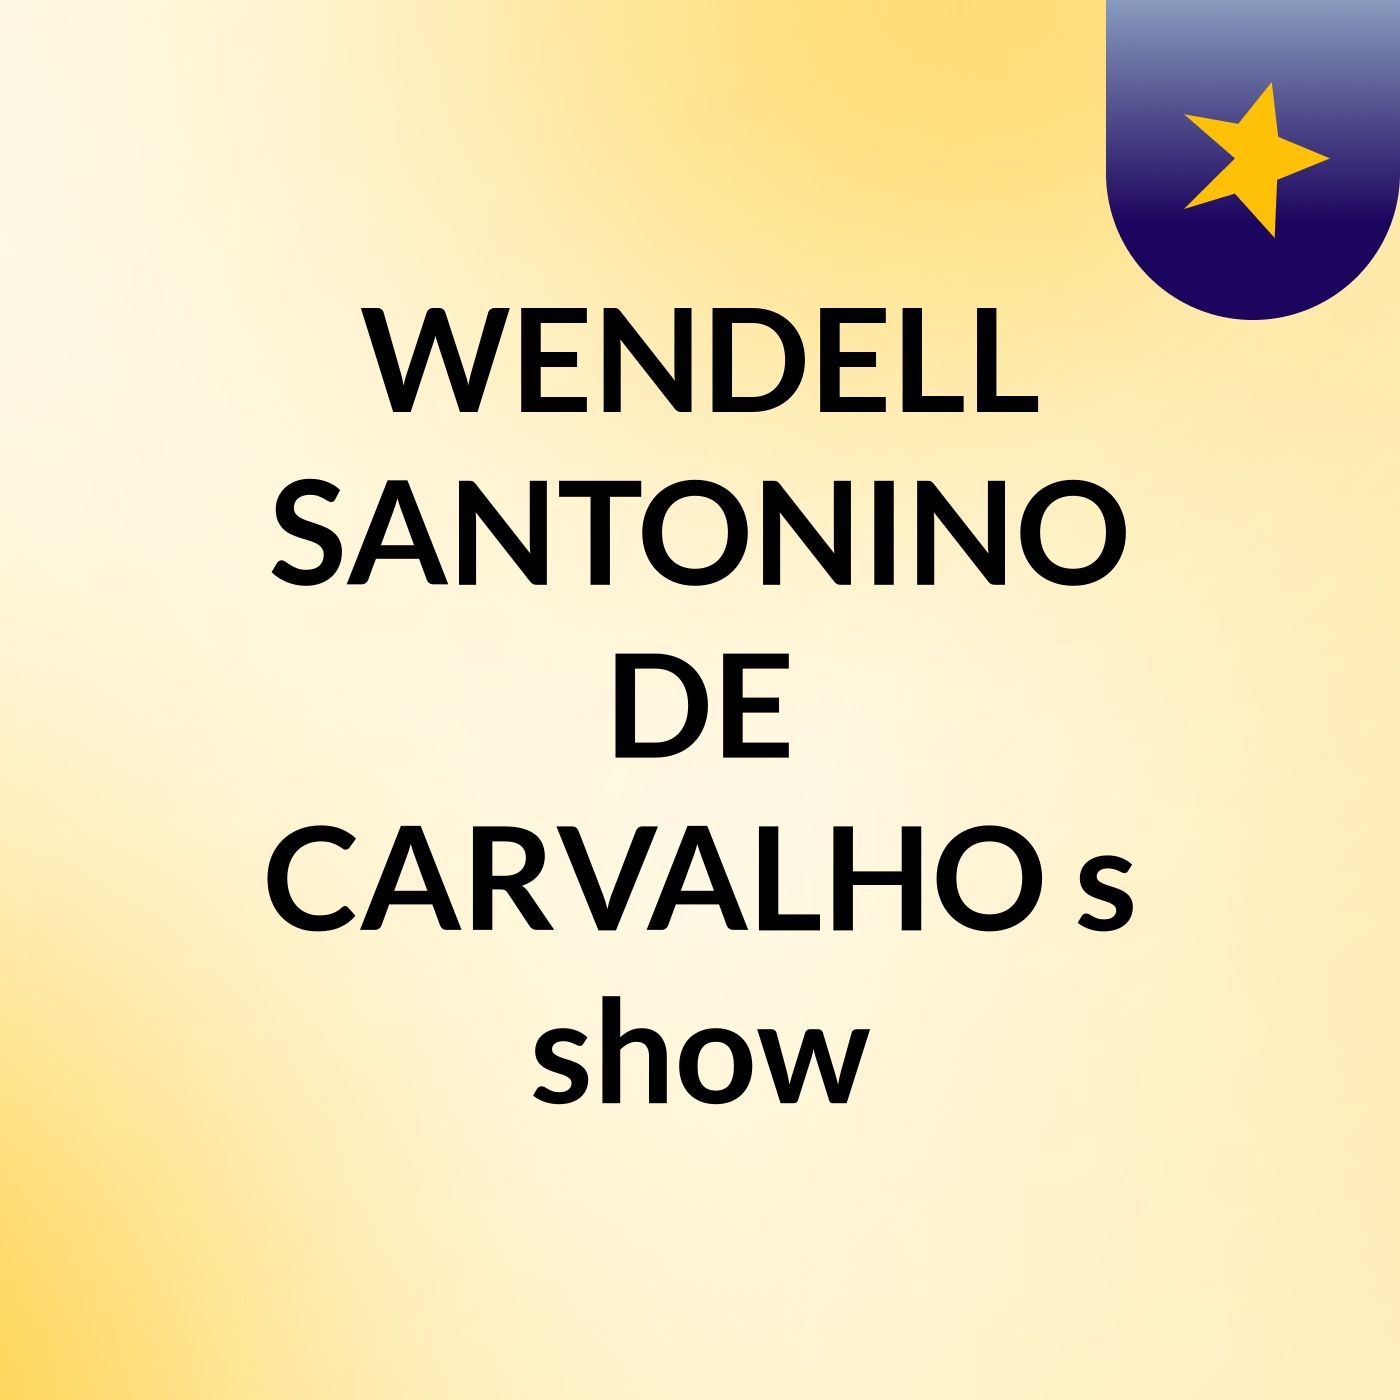 WENDELL SANTONINO DE CARVALHO's show